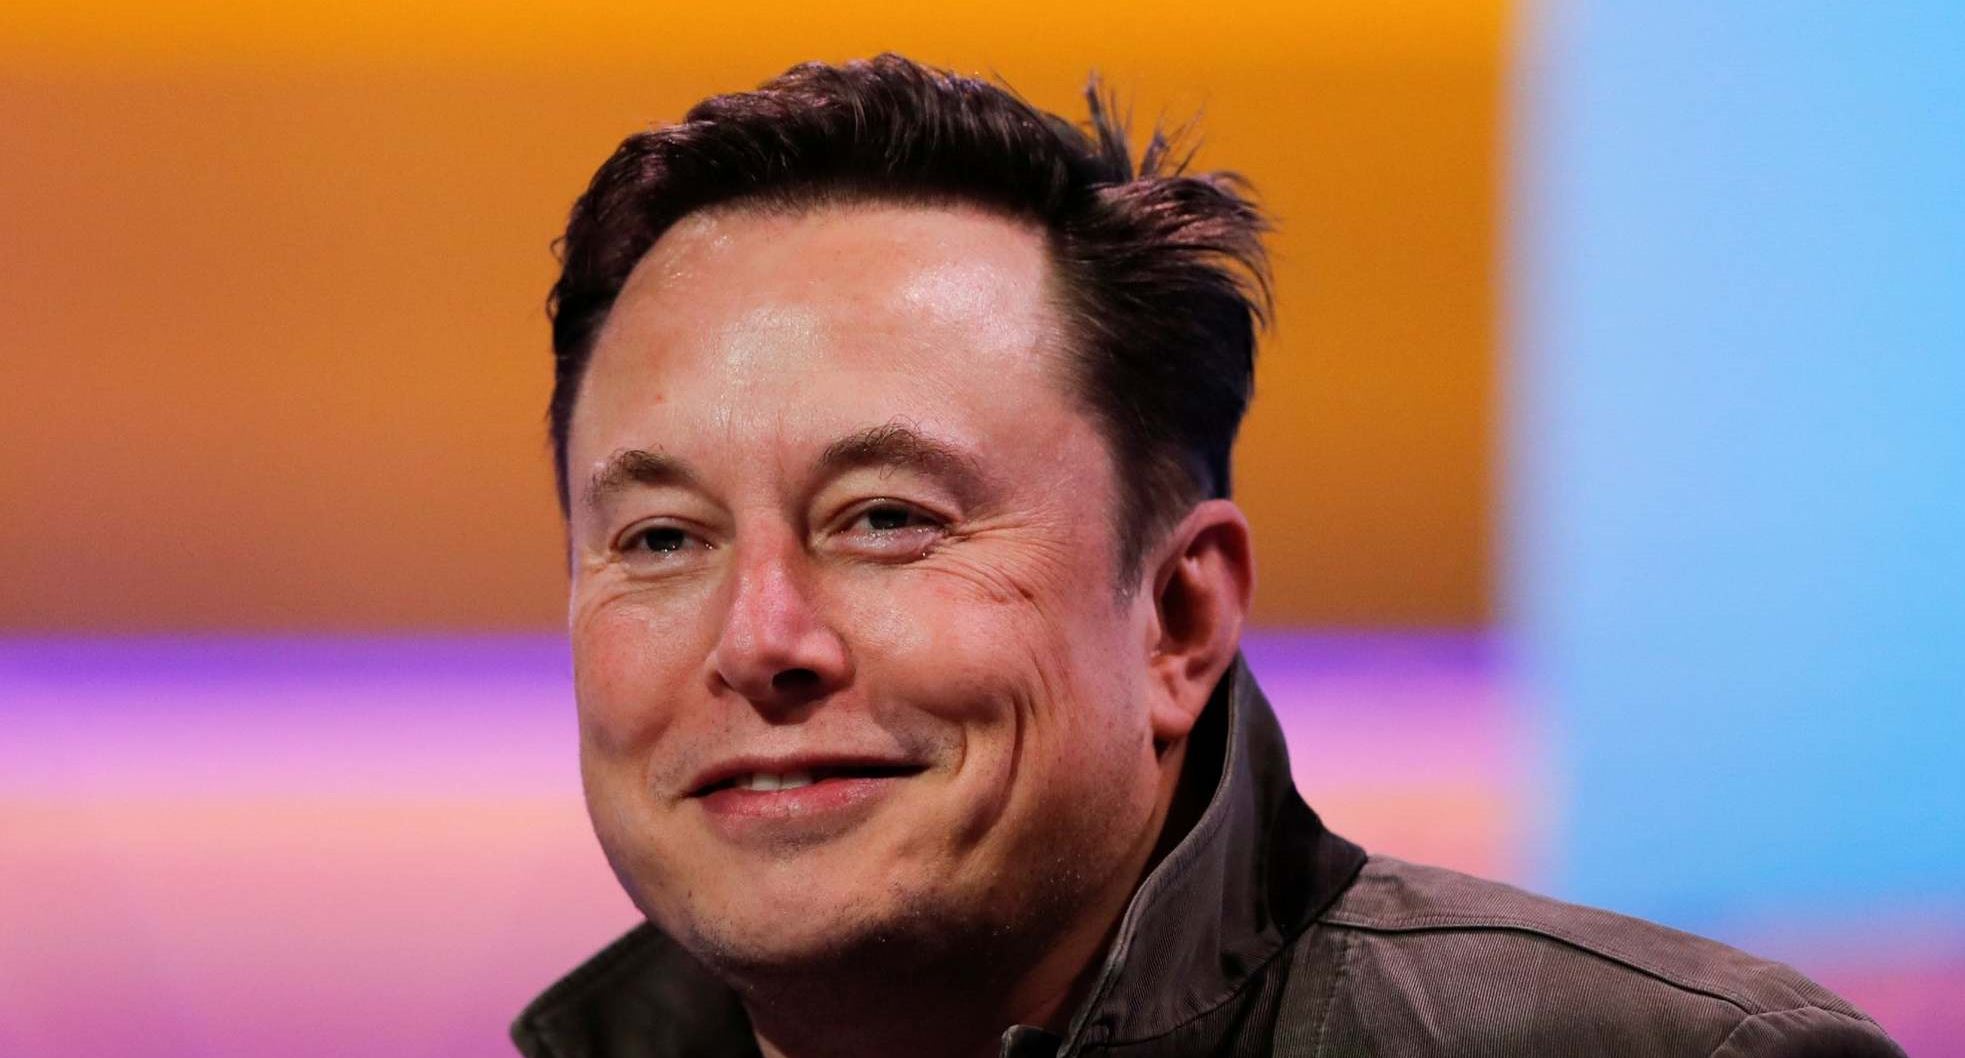 Elon Musk’s Tesla stocks overtake Facebook, now worth $834 billion